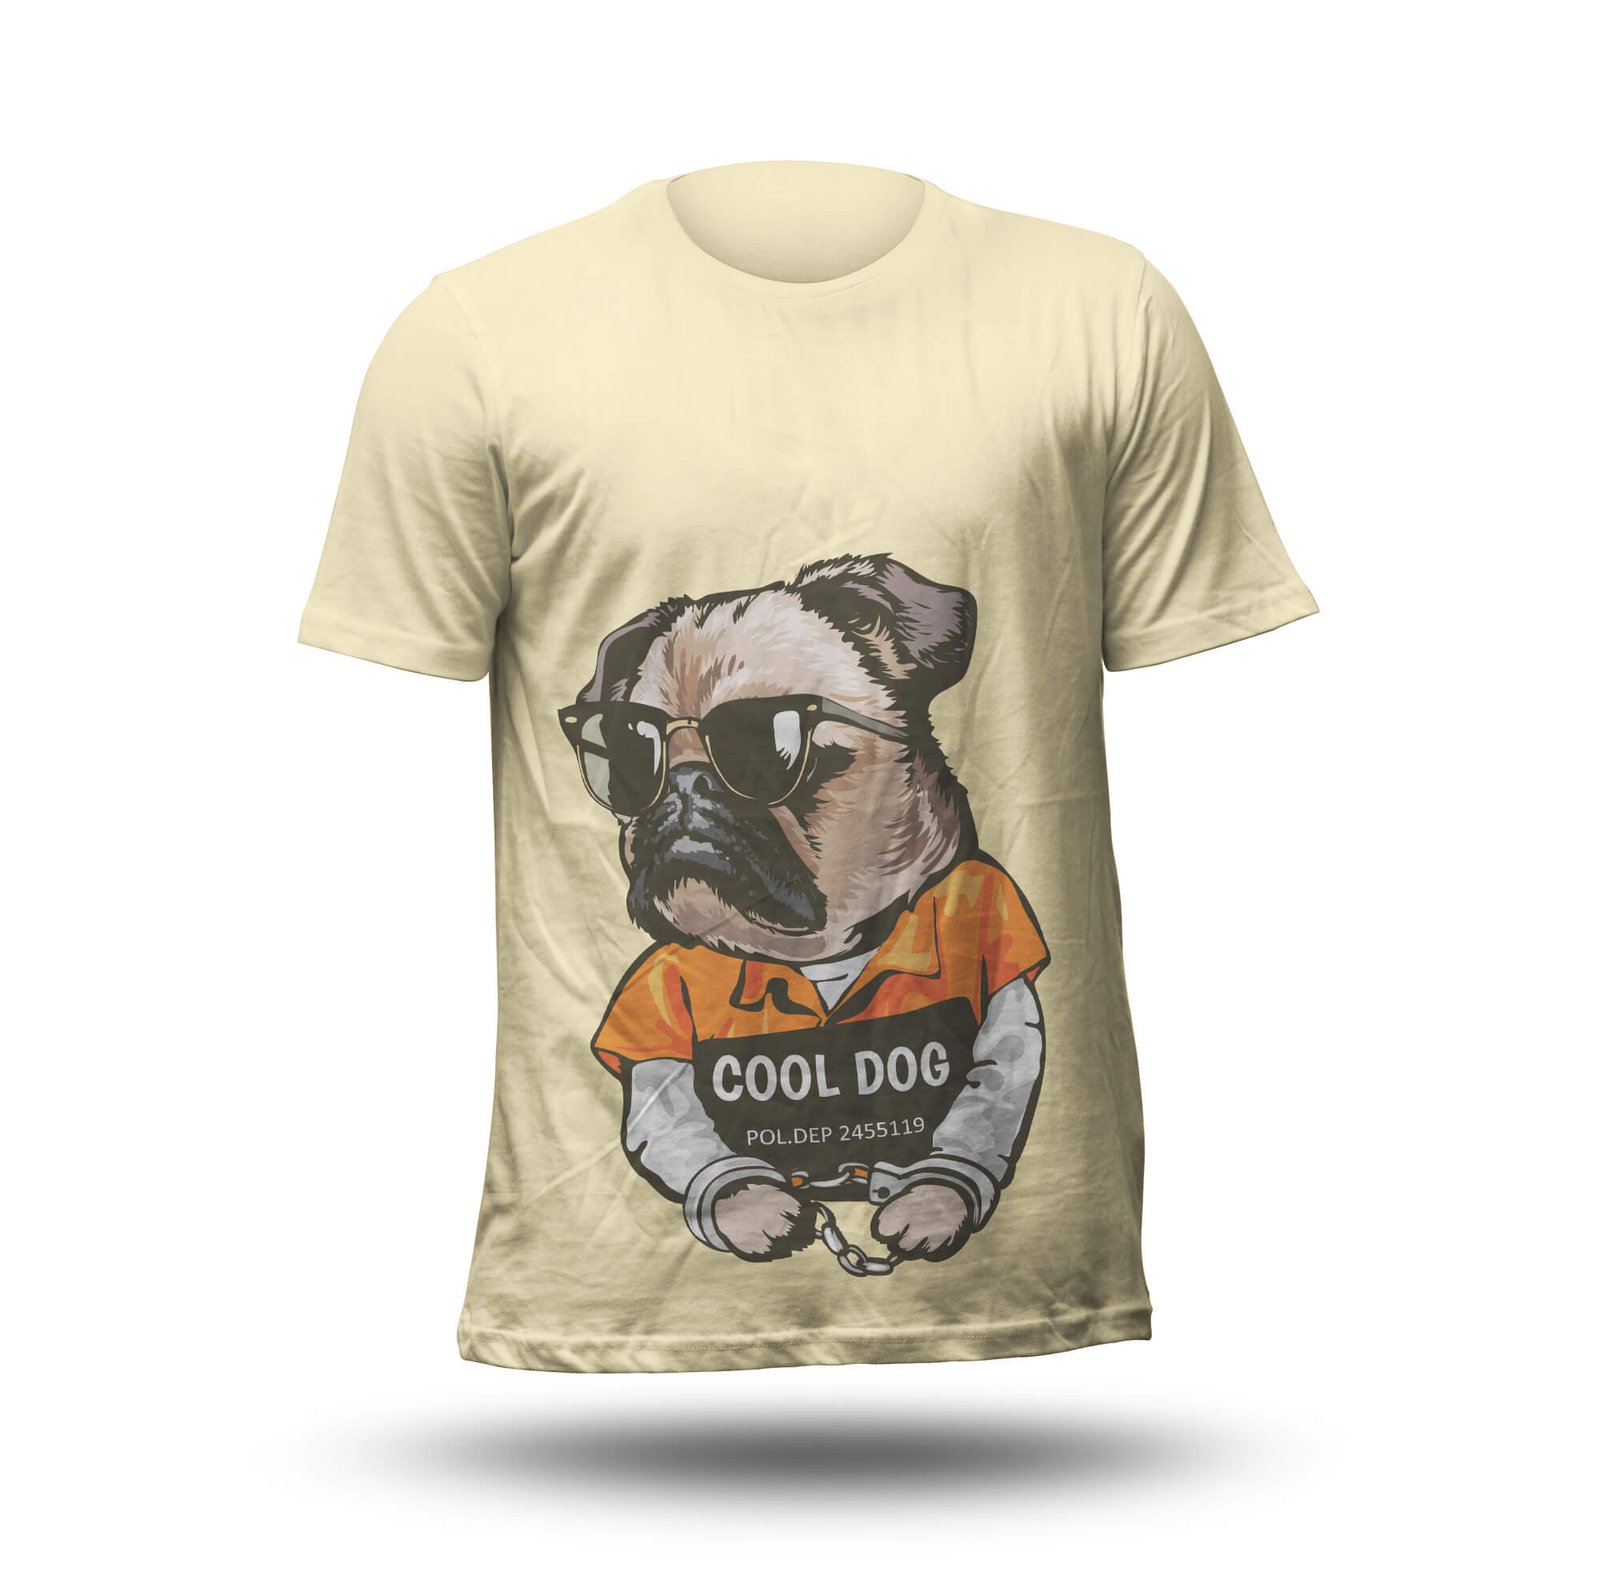 Download Free 3D T Shirt Mockup PSD Template - Mockup Den